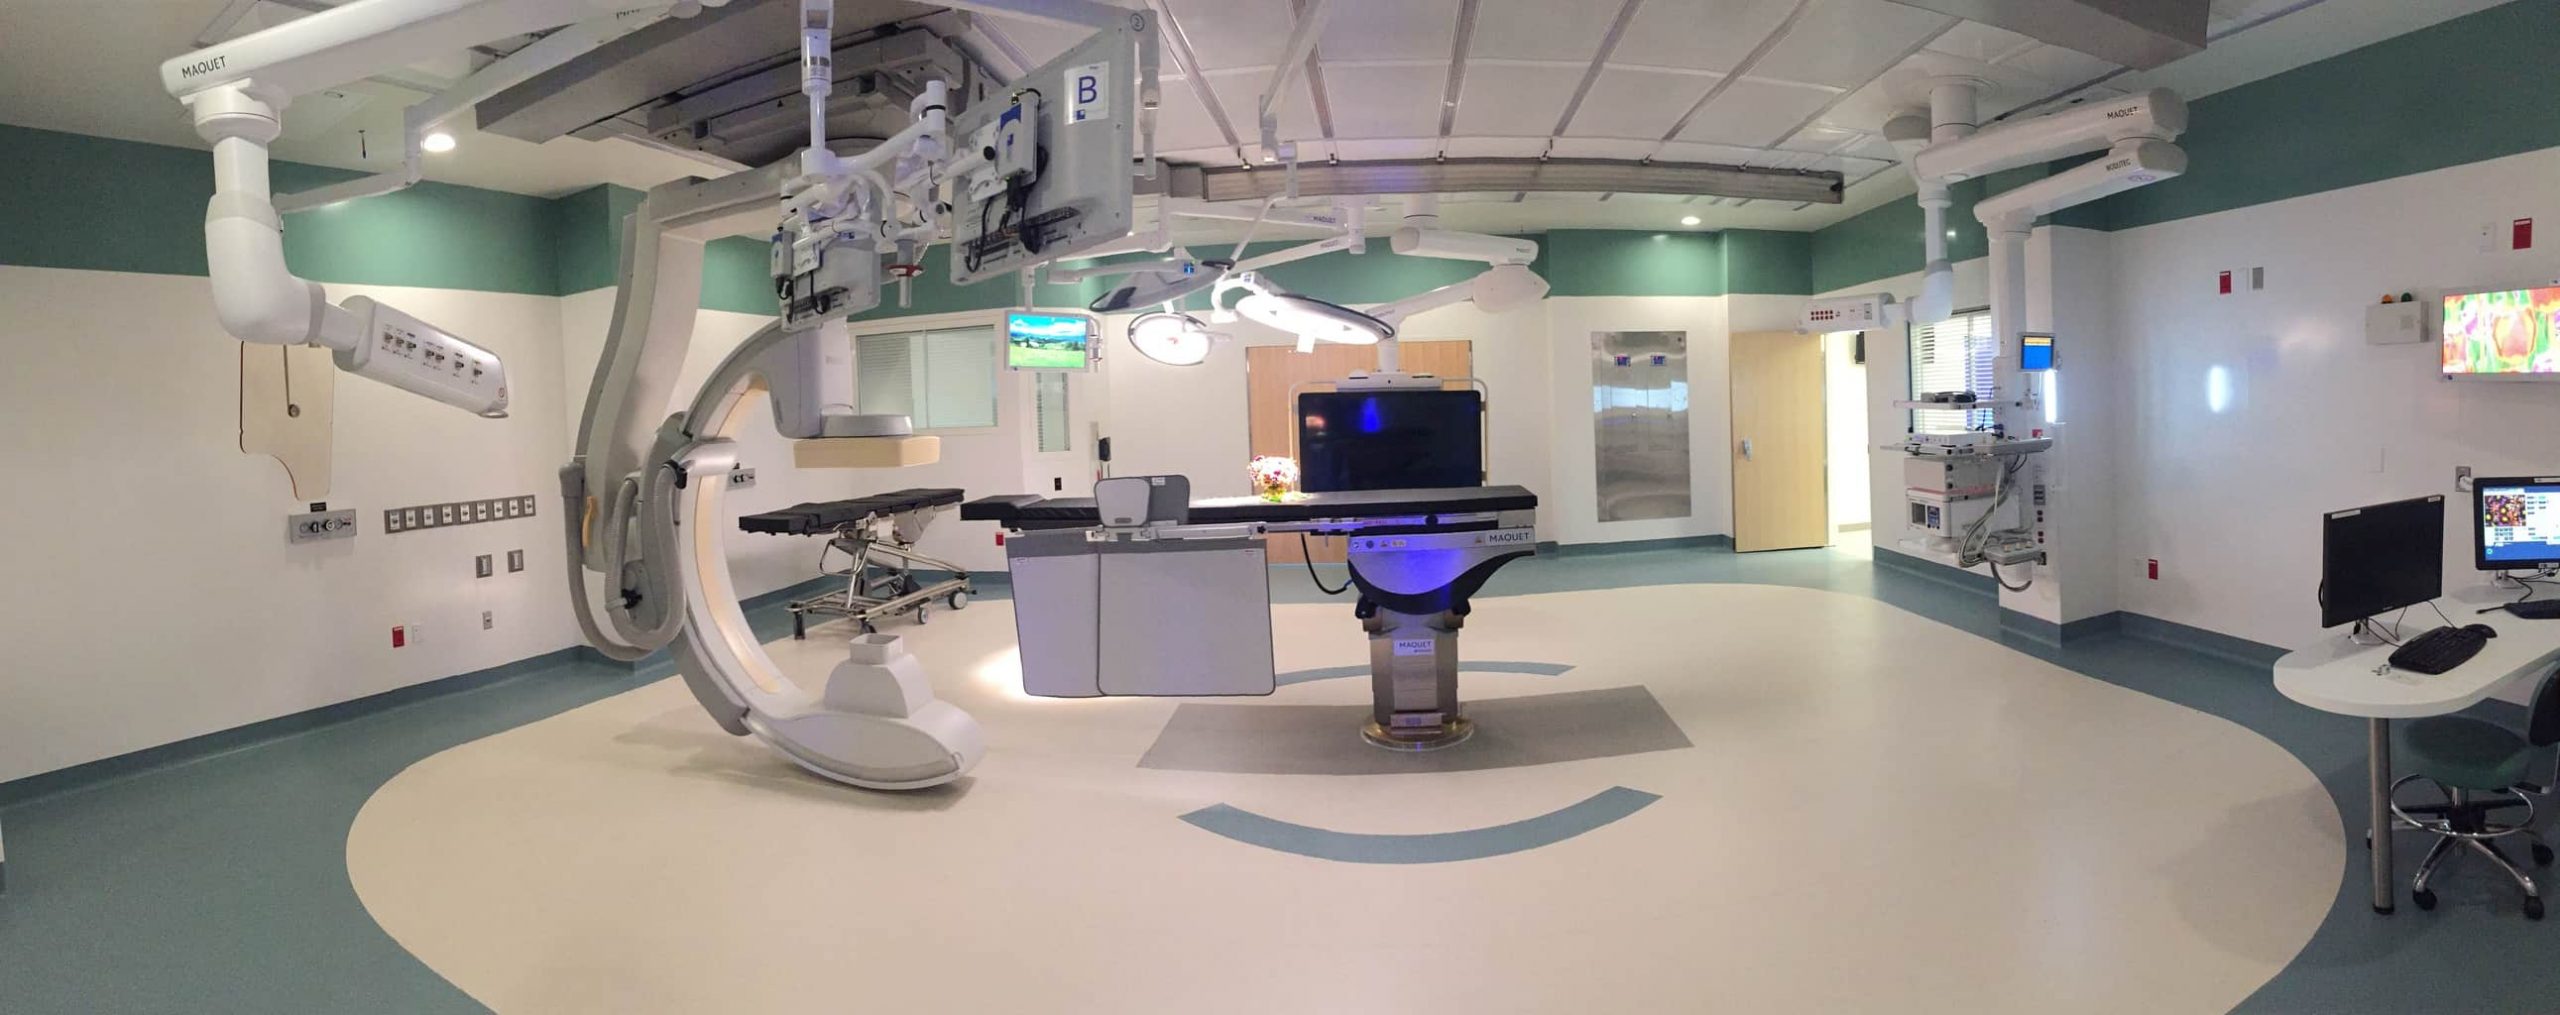 lgh-surgical-room-panorama-b